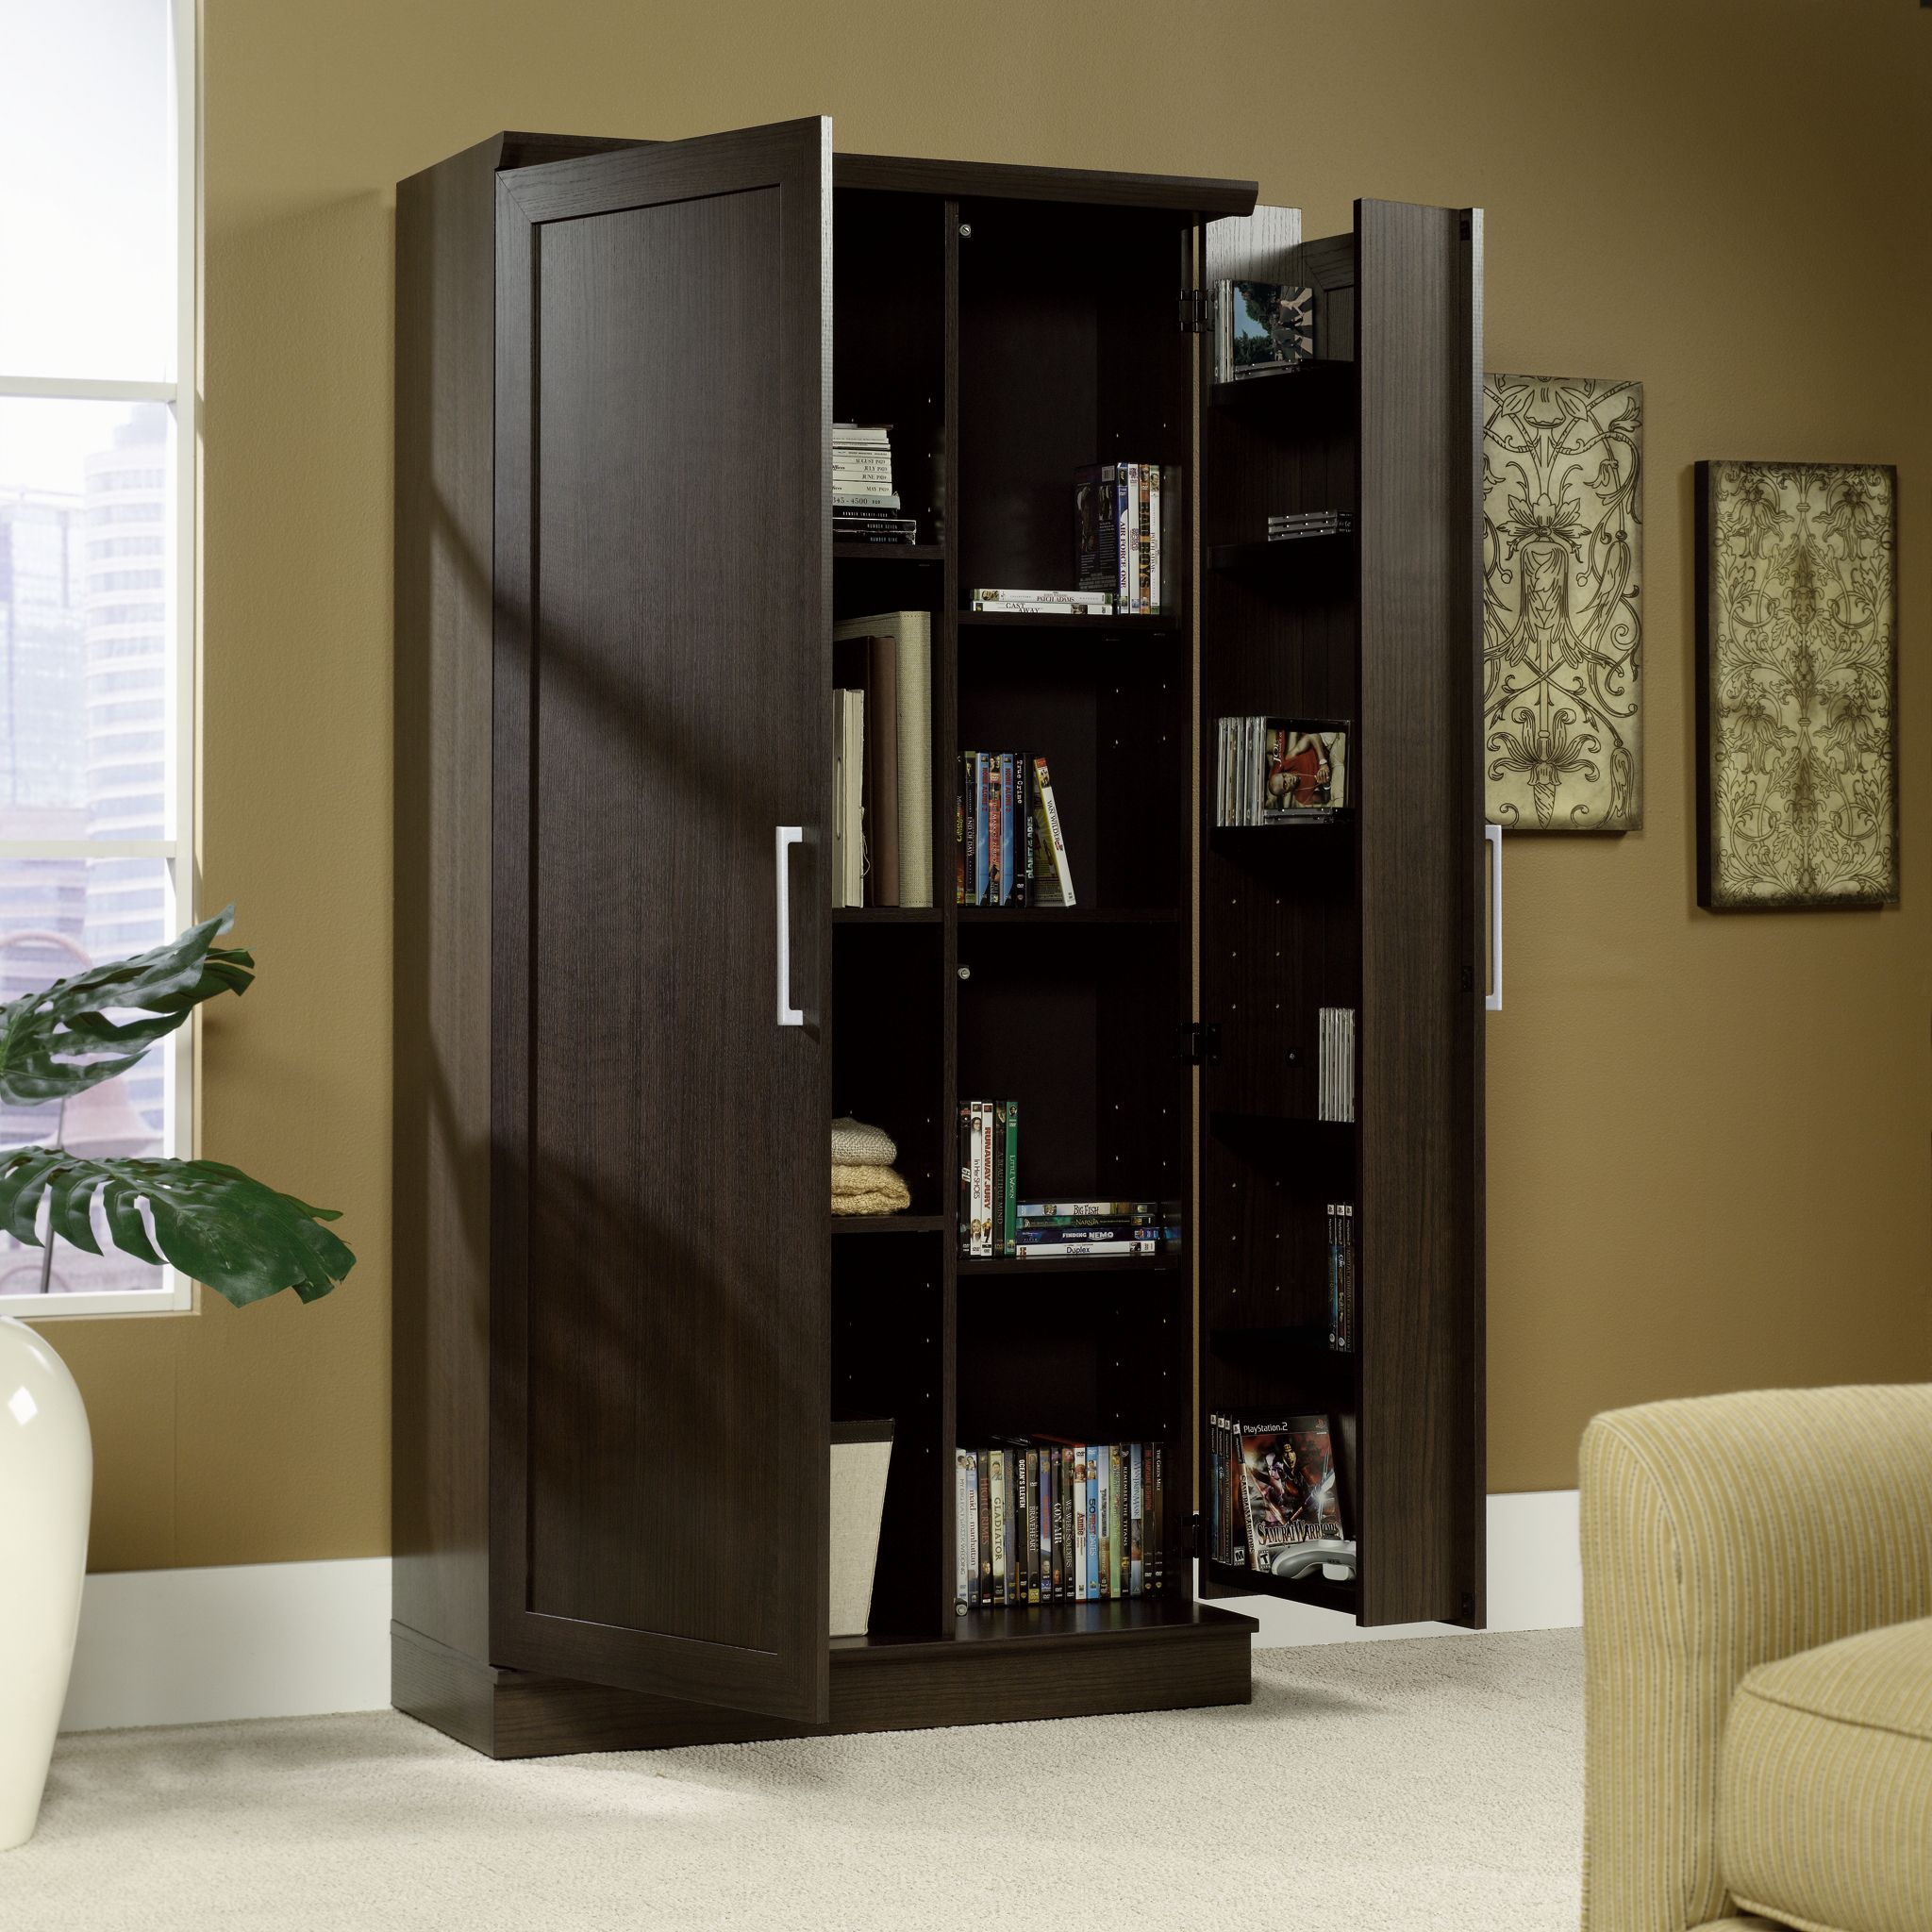 Sauder HomePlus Storage Cabinet, Dakota Oak Finish - image 4 of 12